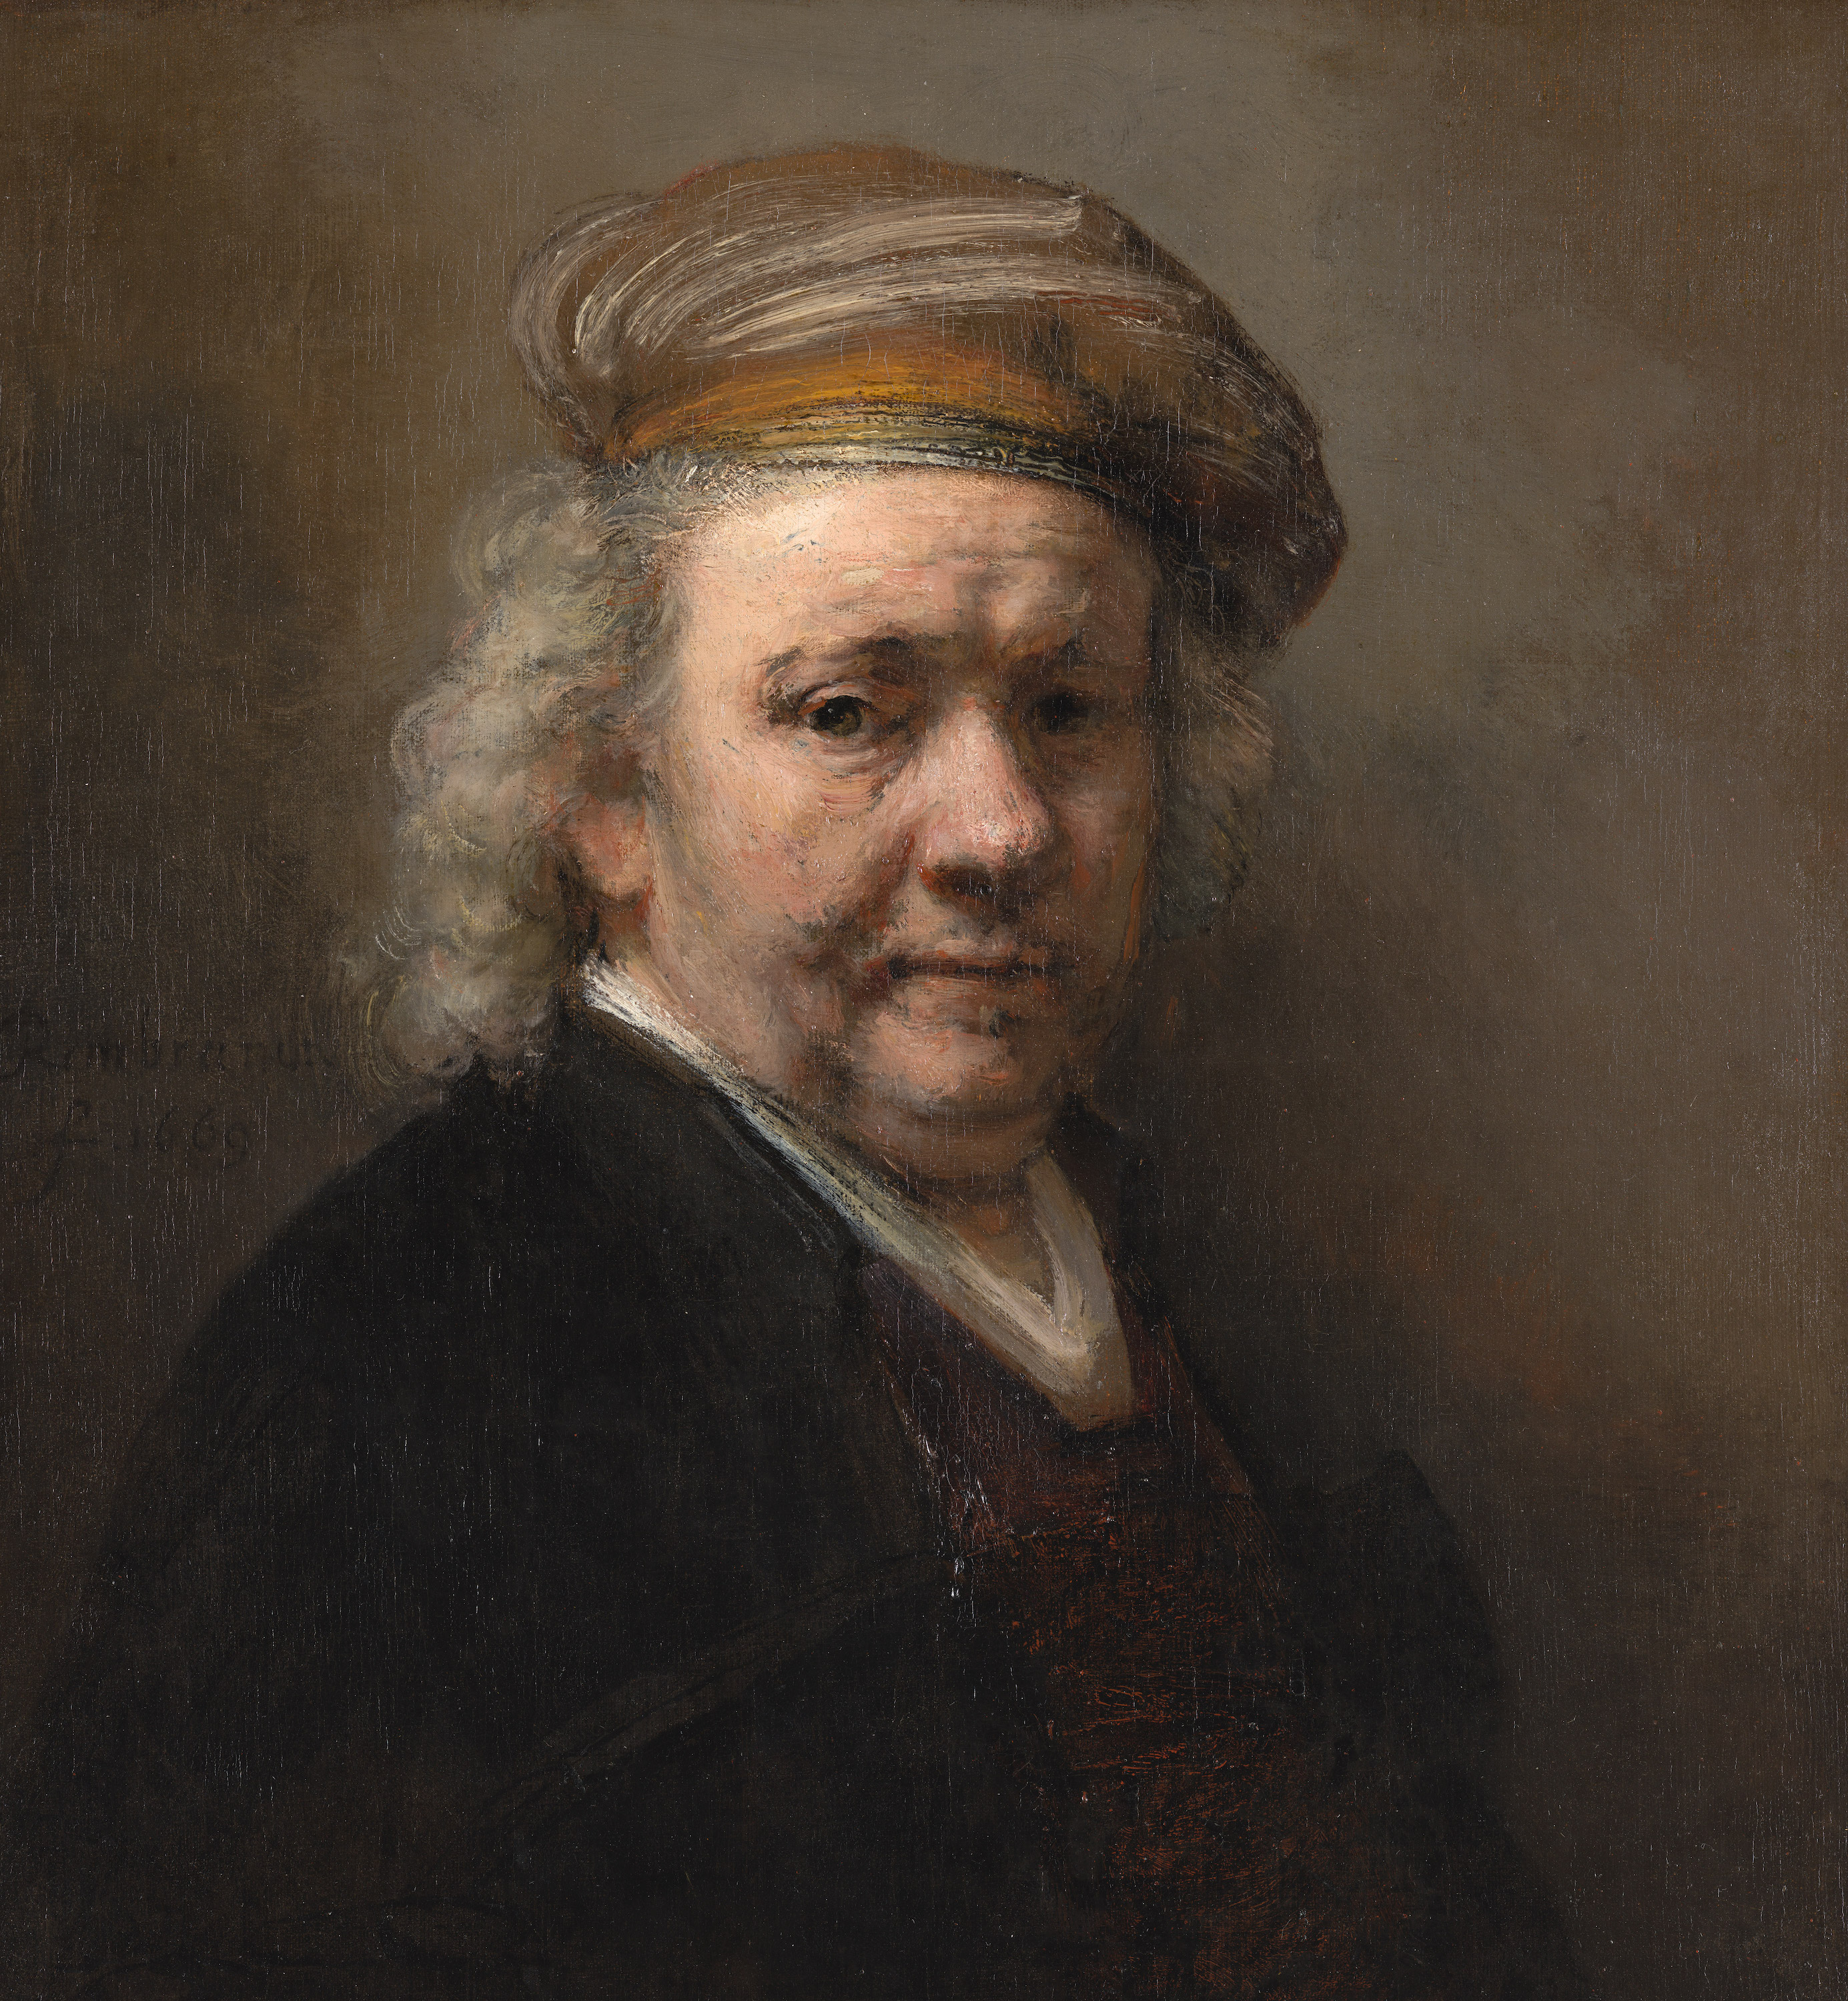 Автопортрет by Rembrandt van Rijn - 1669 - 65.4 x 60.2 cm 